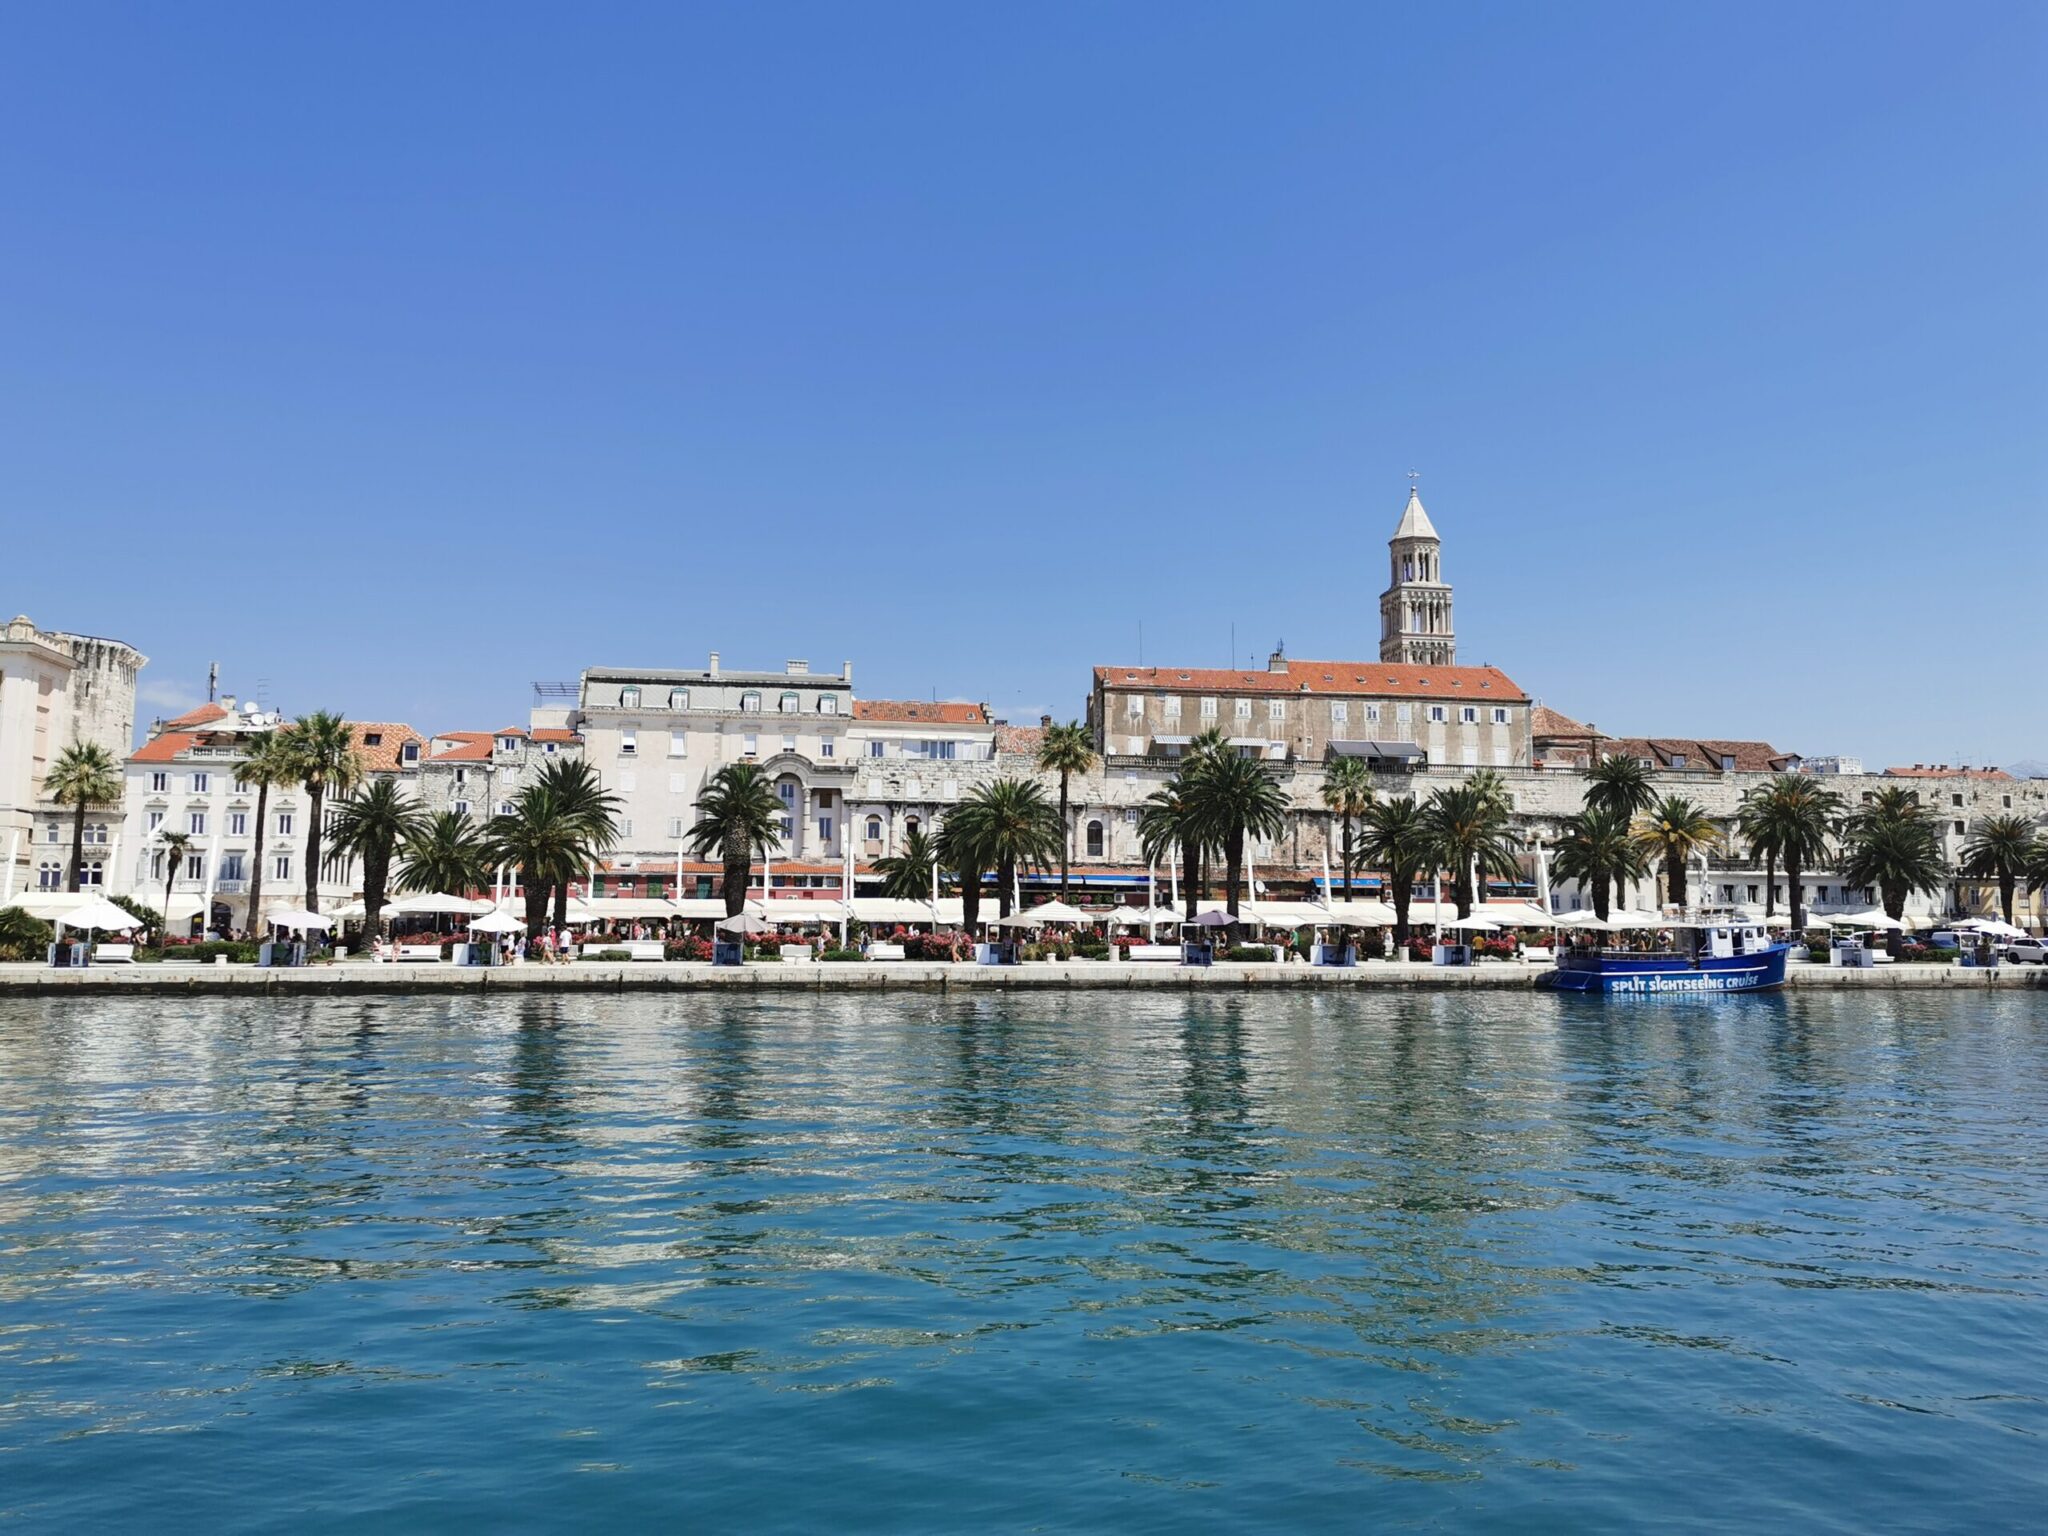 Split in Croatia